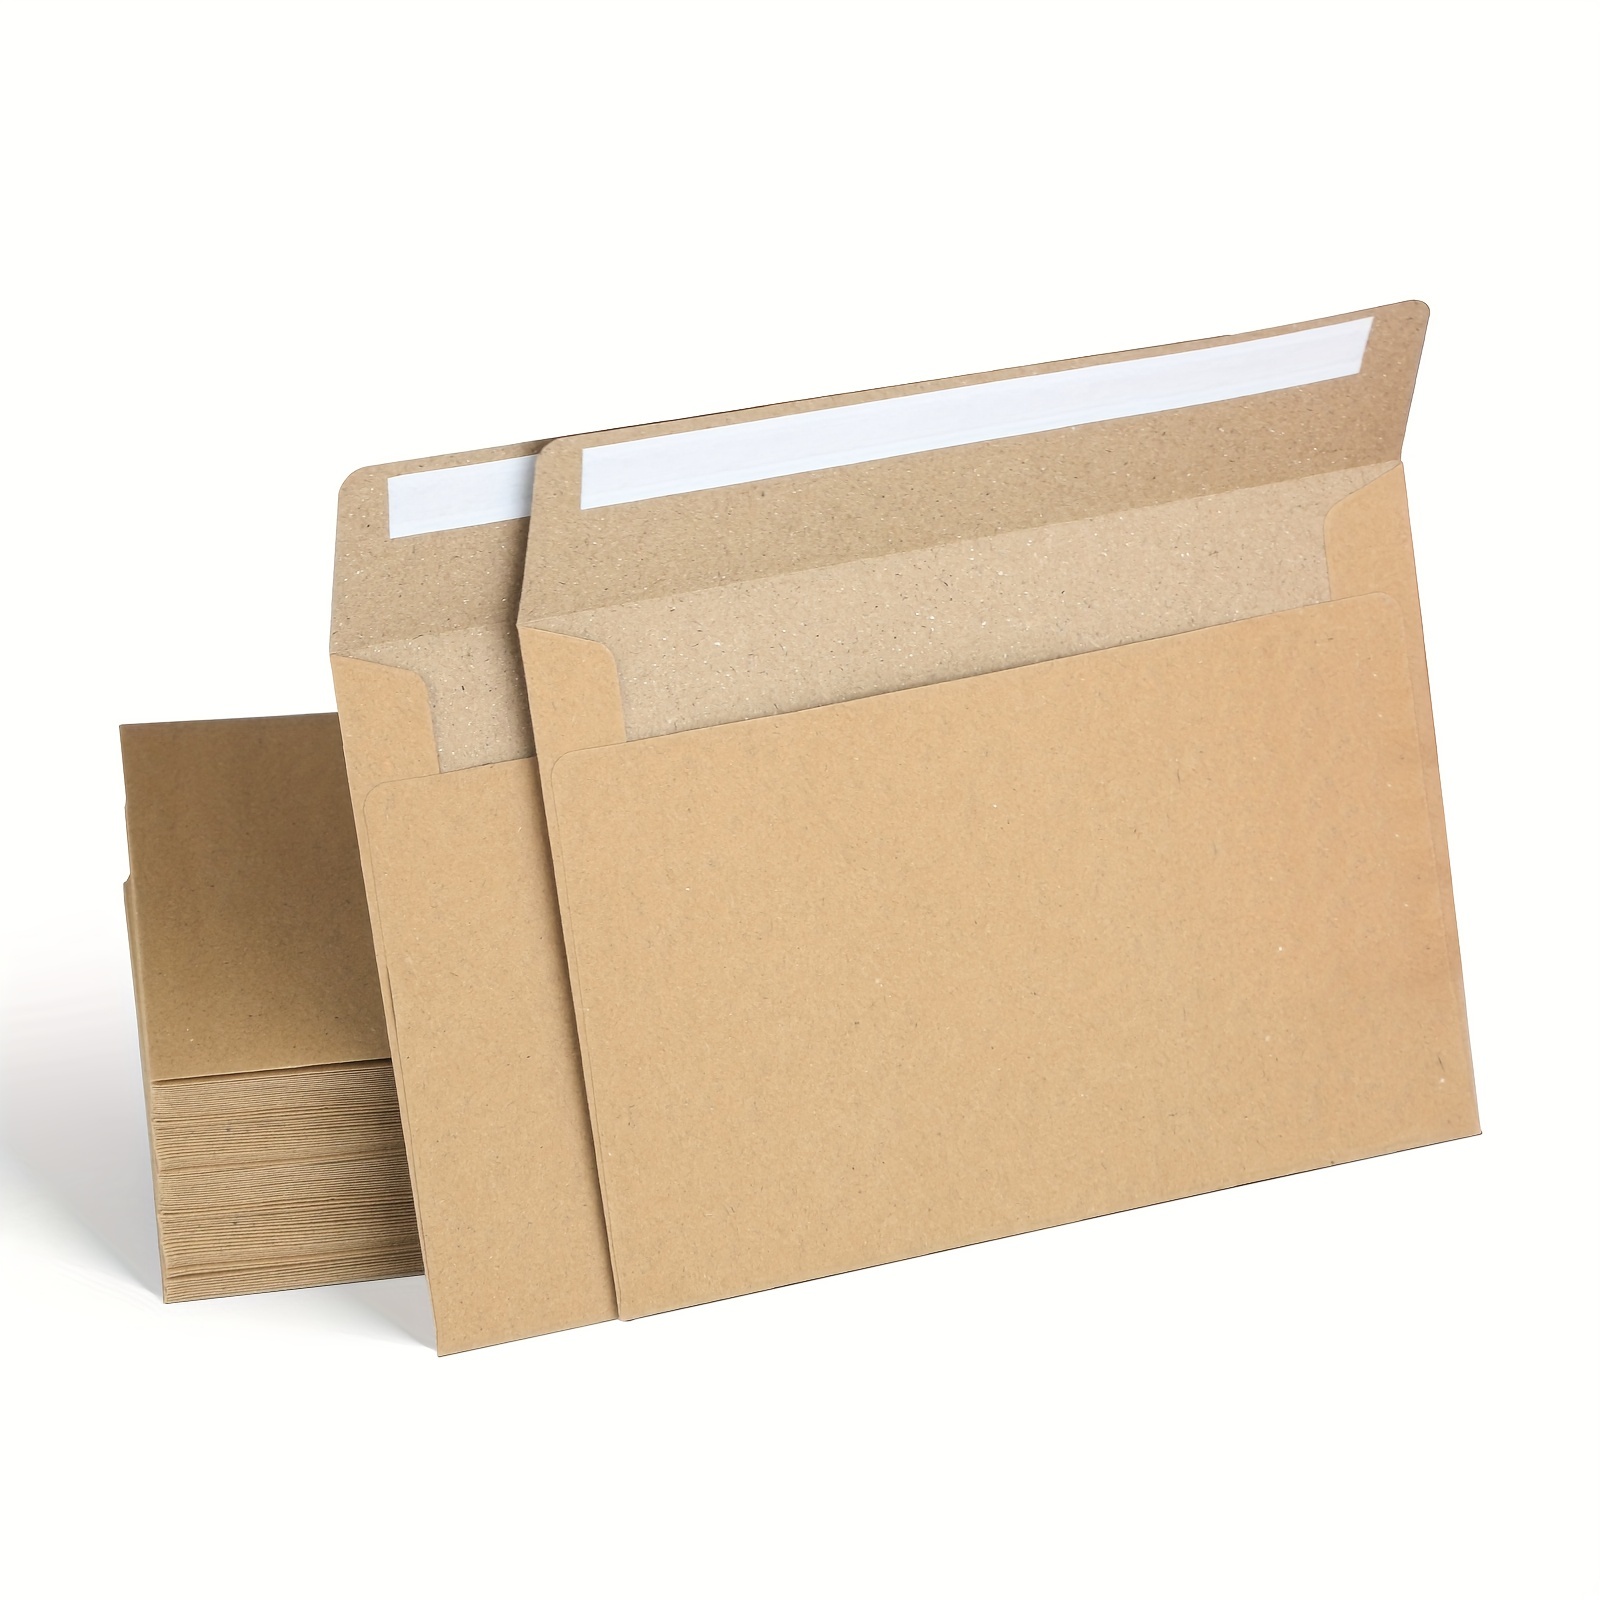 100 Brown Invitation Envelopes 5x7 A7 w/ 50 Sheet Inkjet Photo